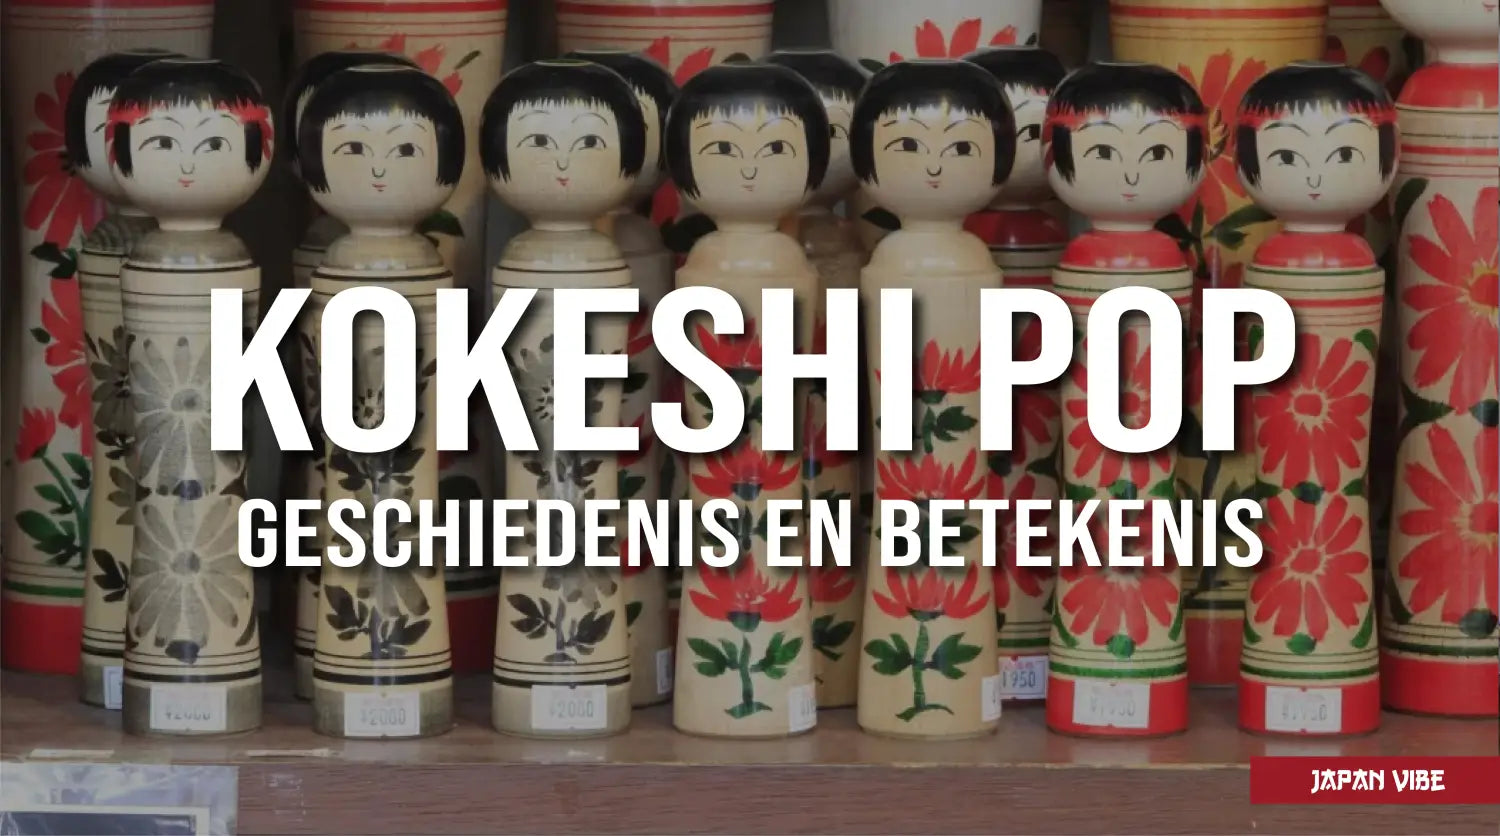 kokeshi pop betekenis